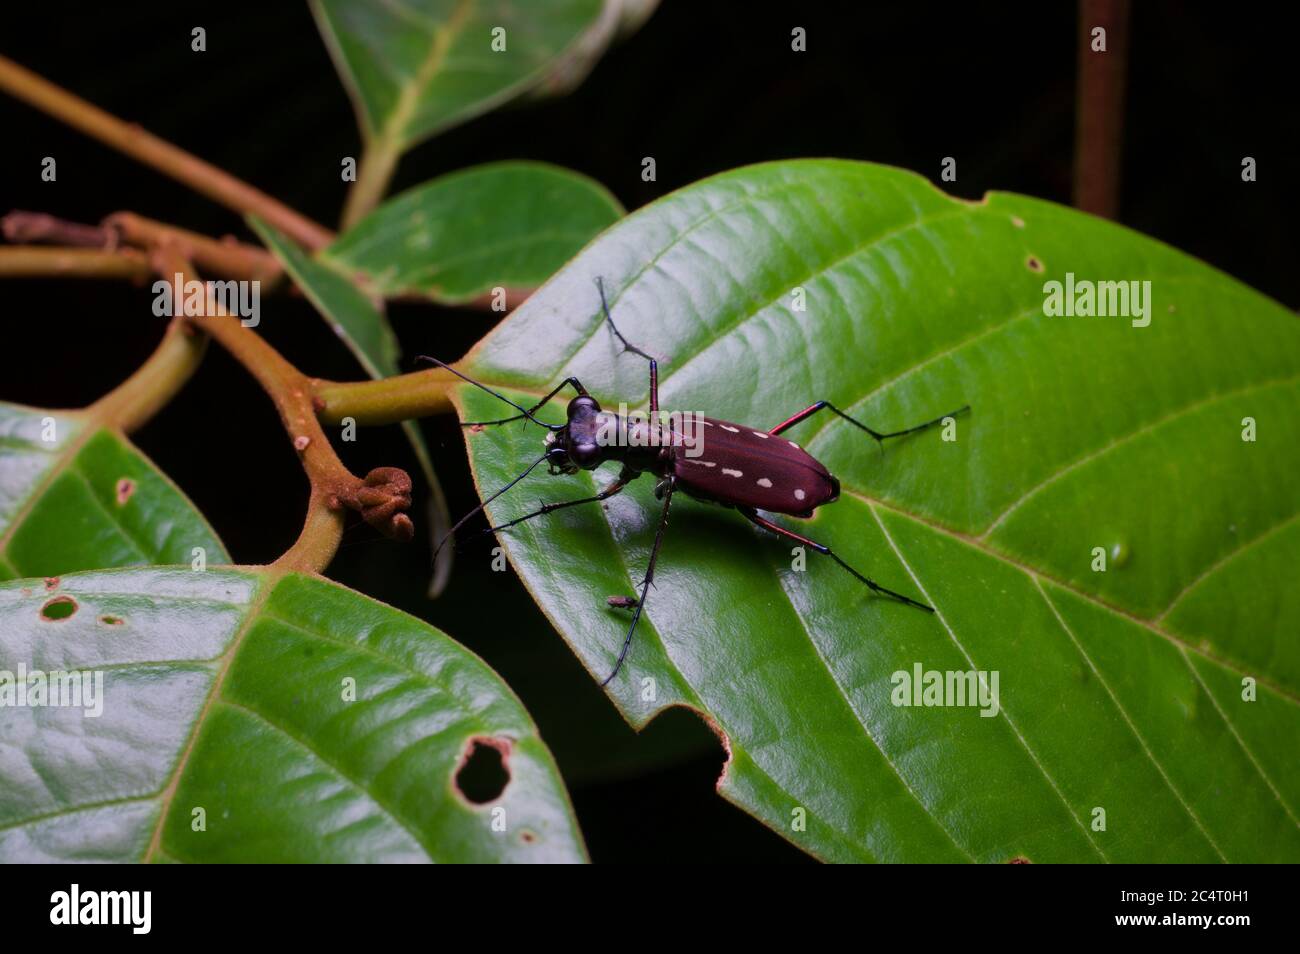 A tiger beetle (Cicindela lacrymans) on a leaf at night in the lowland rainforest near Sinharaja, Sri Lanka Stock Photo